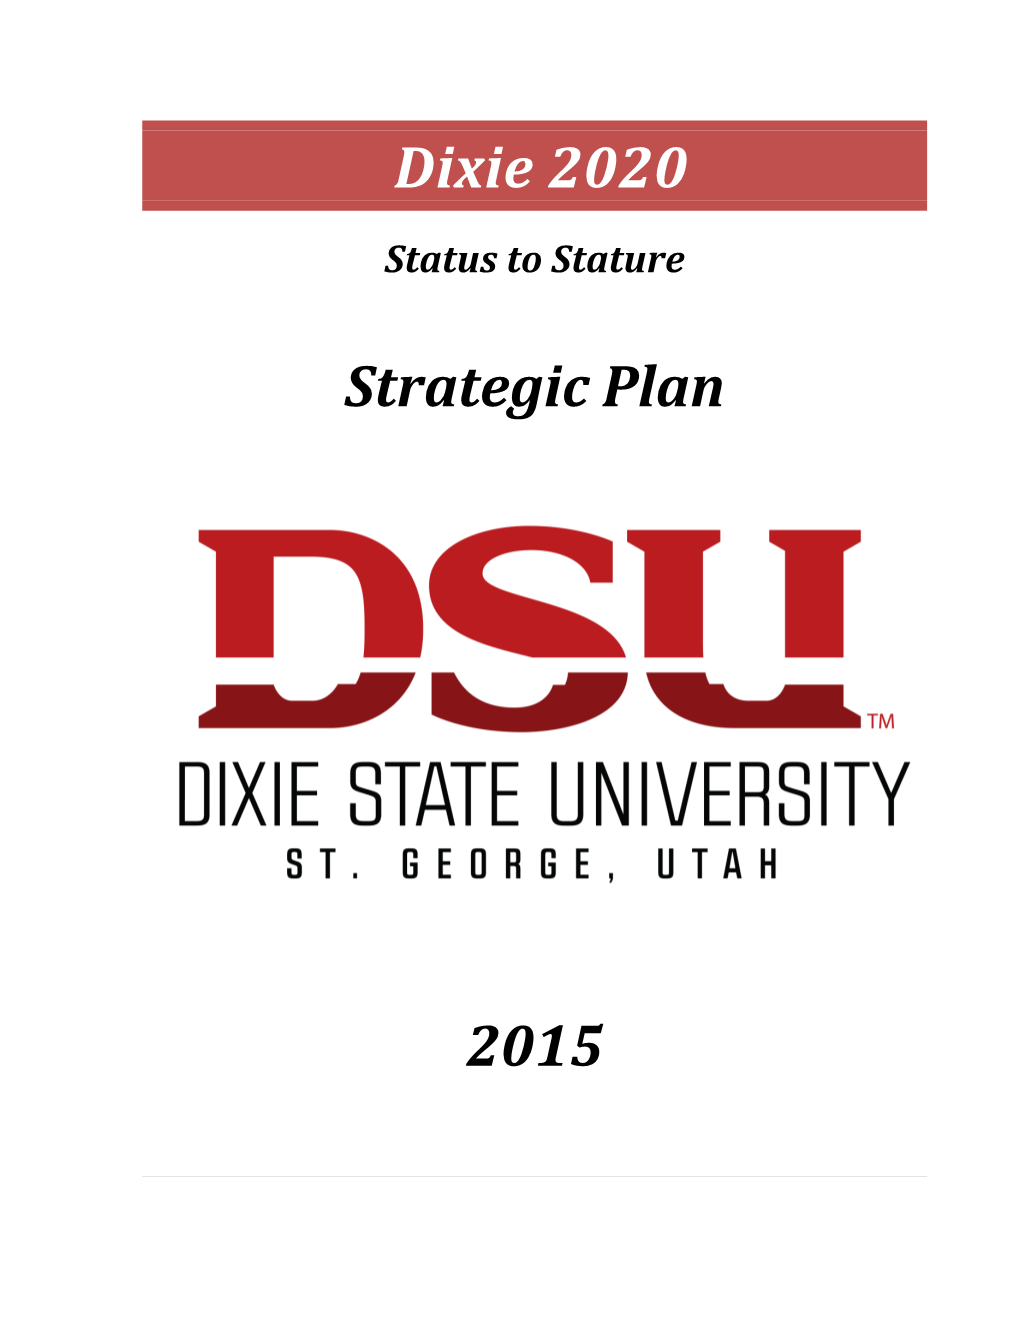 DSU STRATEGIC PLAN Dixie 2020:Status to Stature